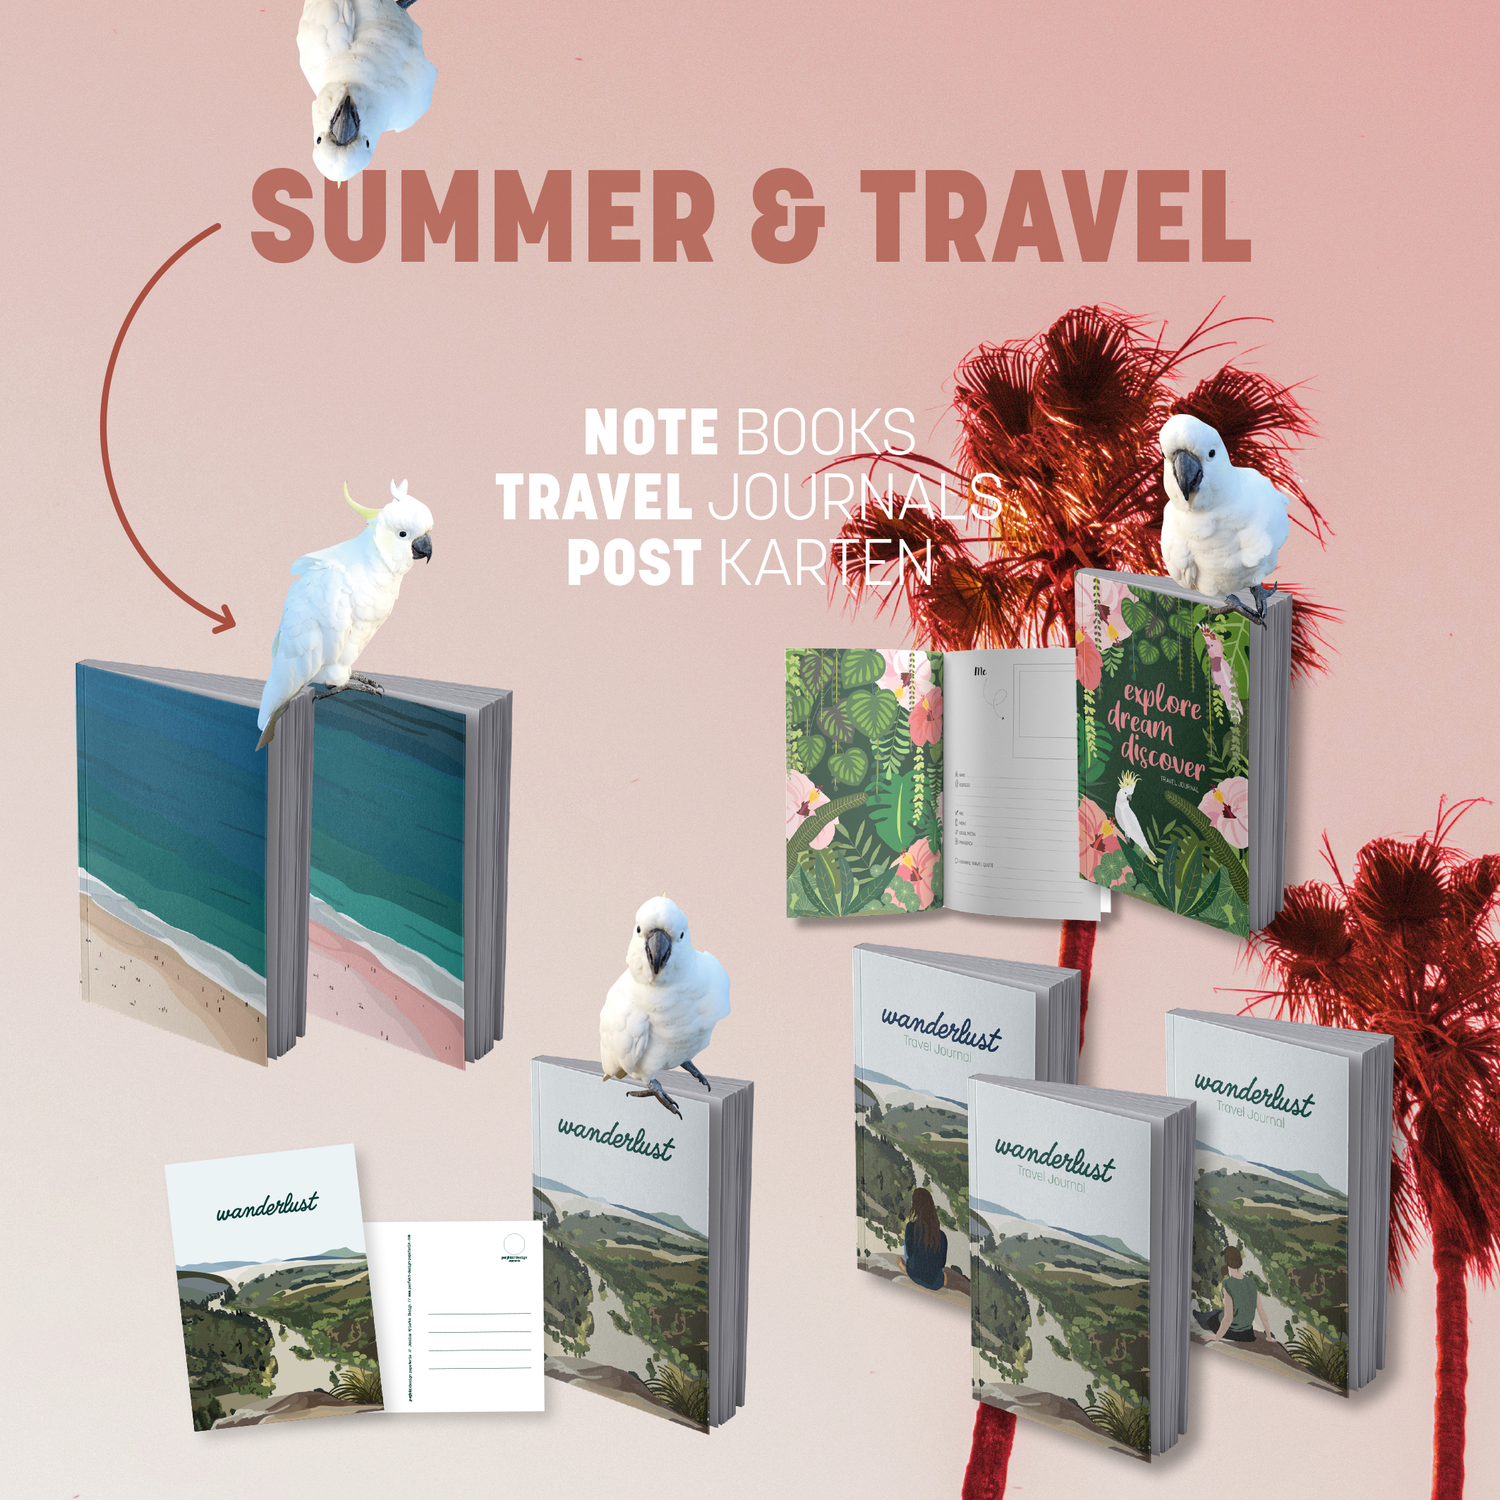 Summer & Travel